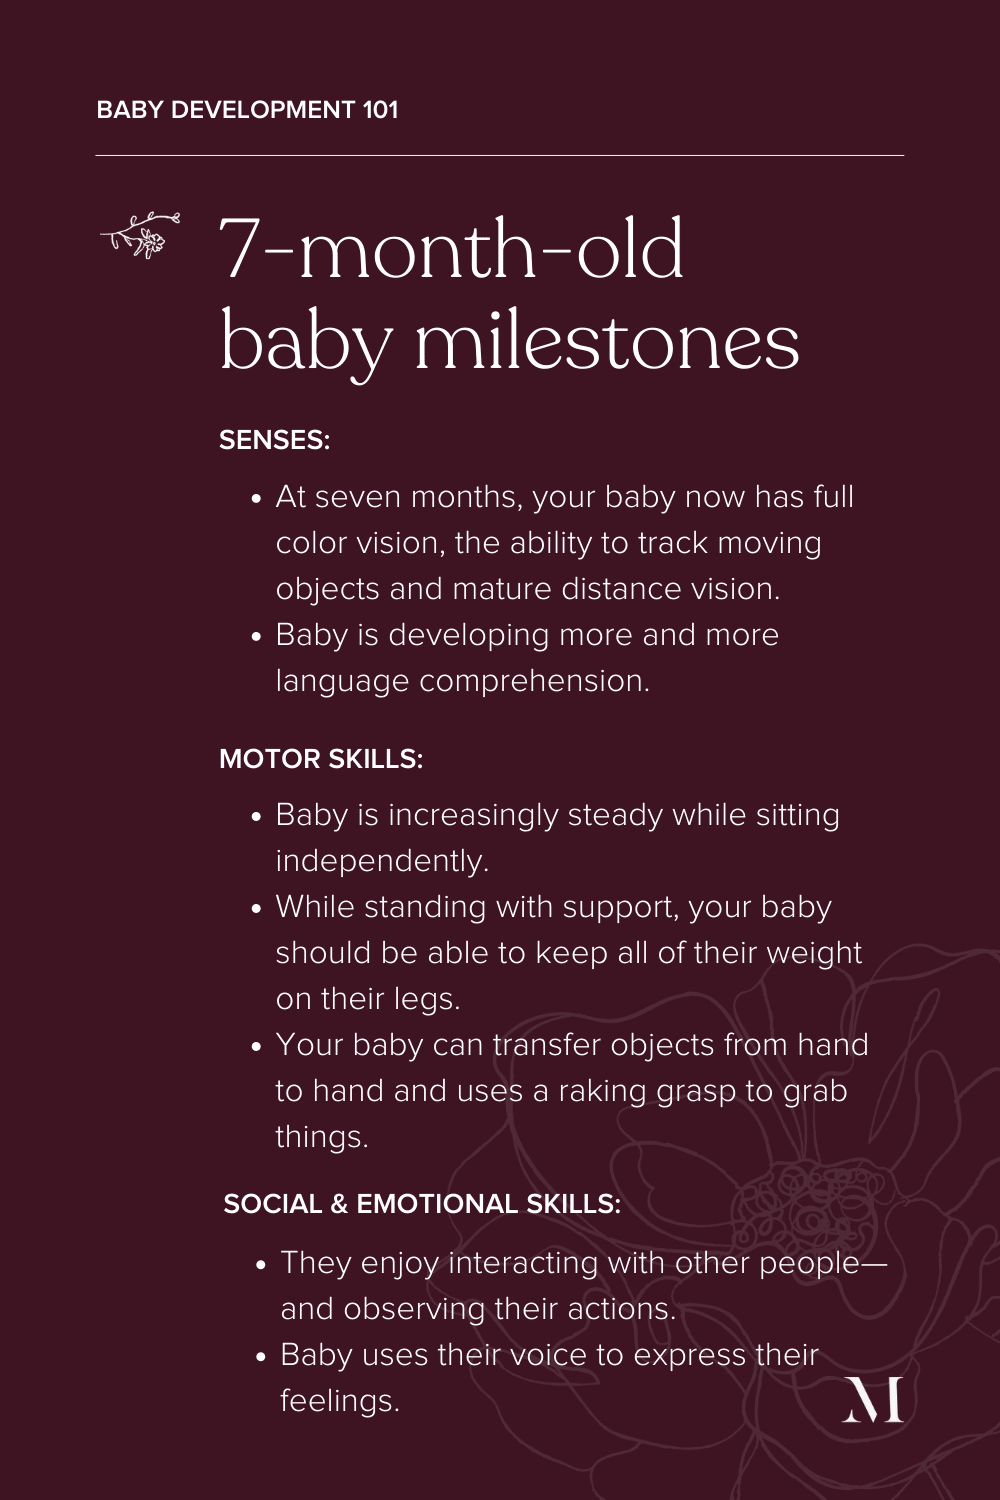 summary of 7-month-old baby milestones - sensory and motor development